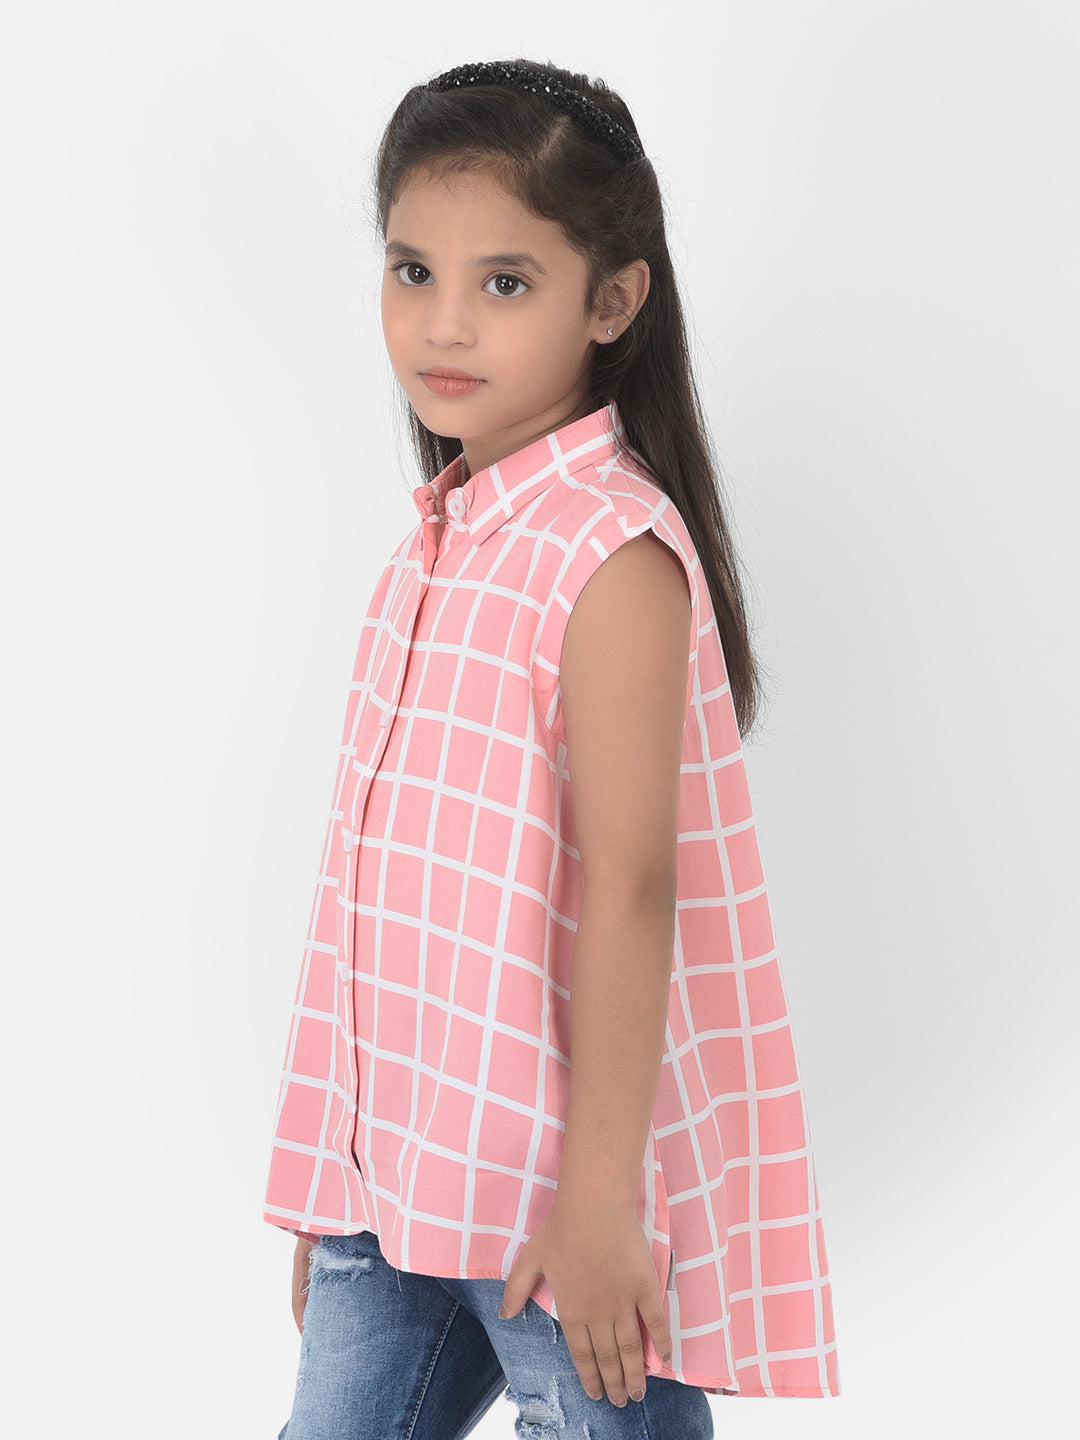 Pink Checked Shirt - Girls Shirts